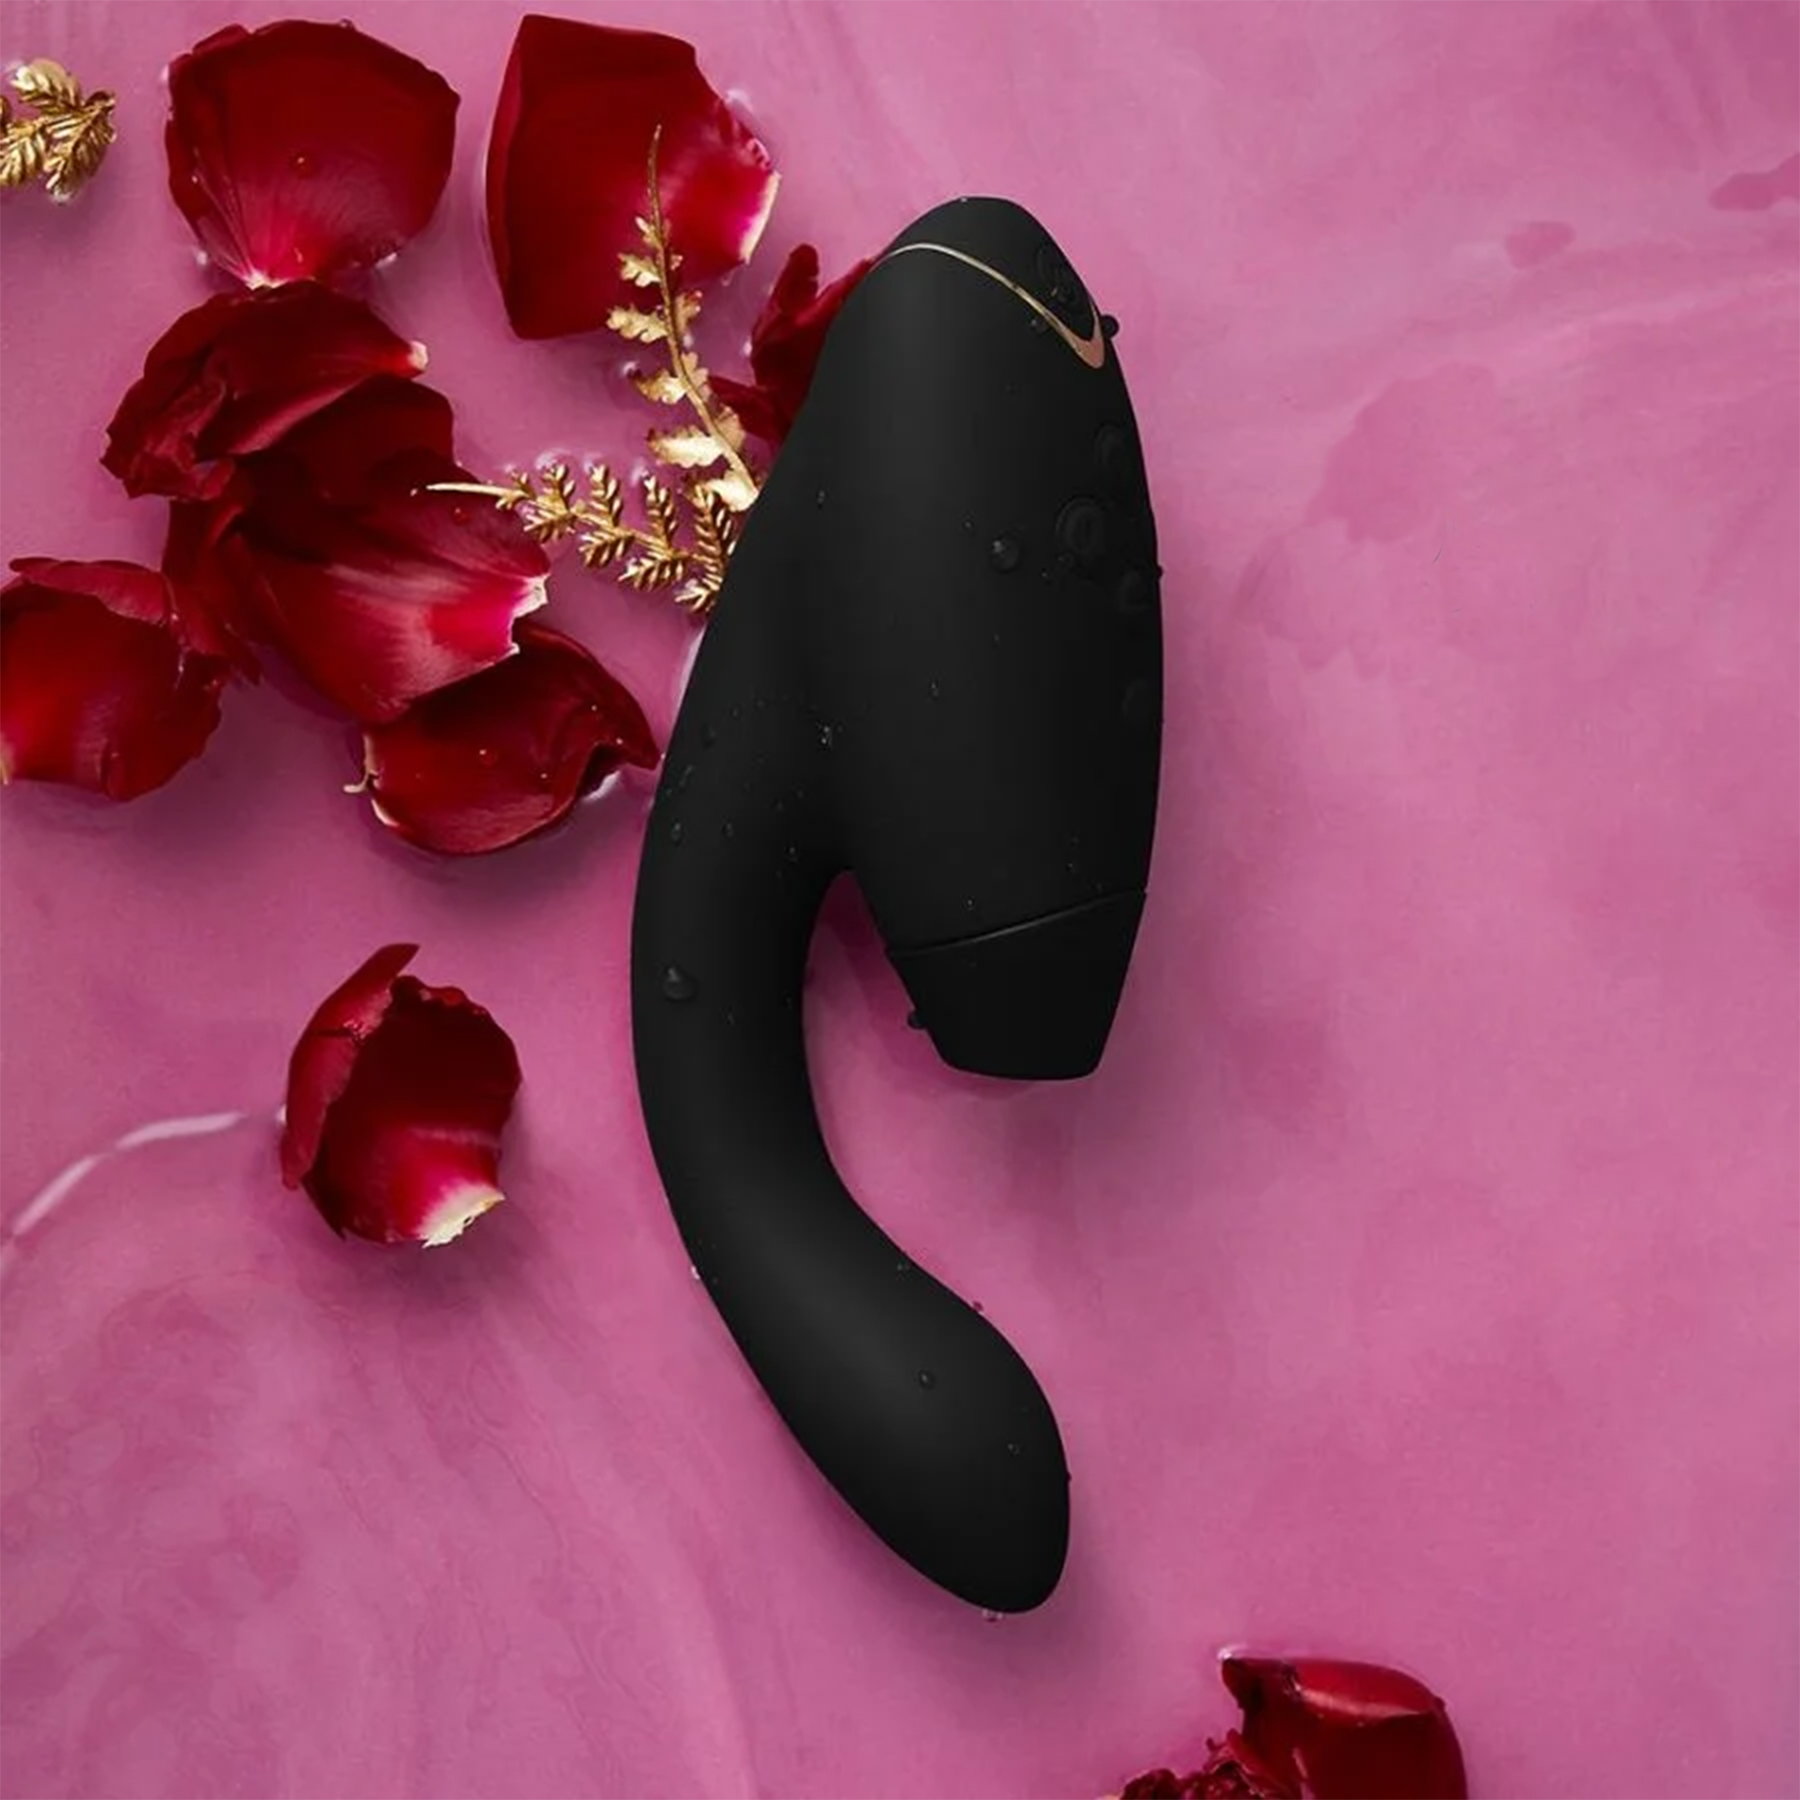 Black dual-stimulation sex toy next to rose petals